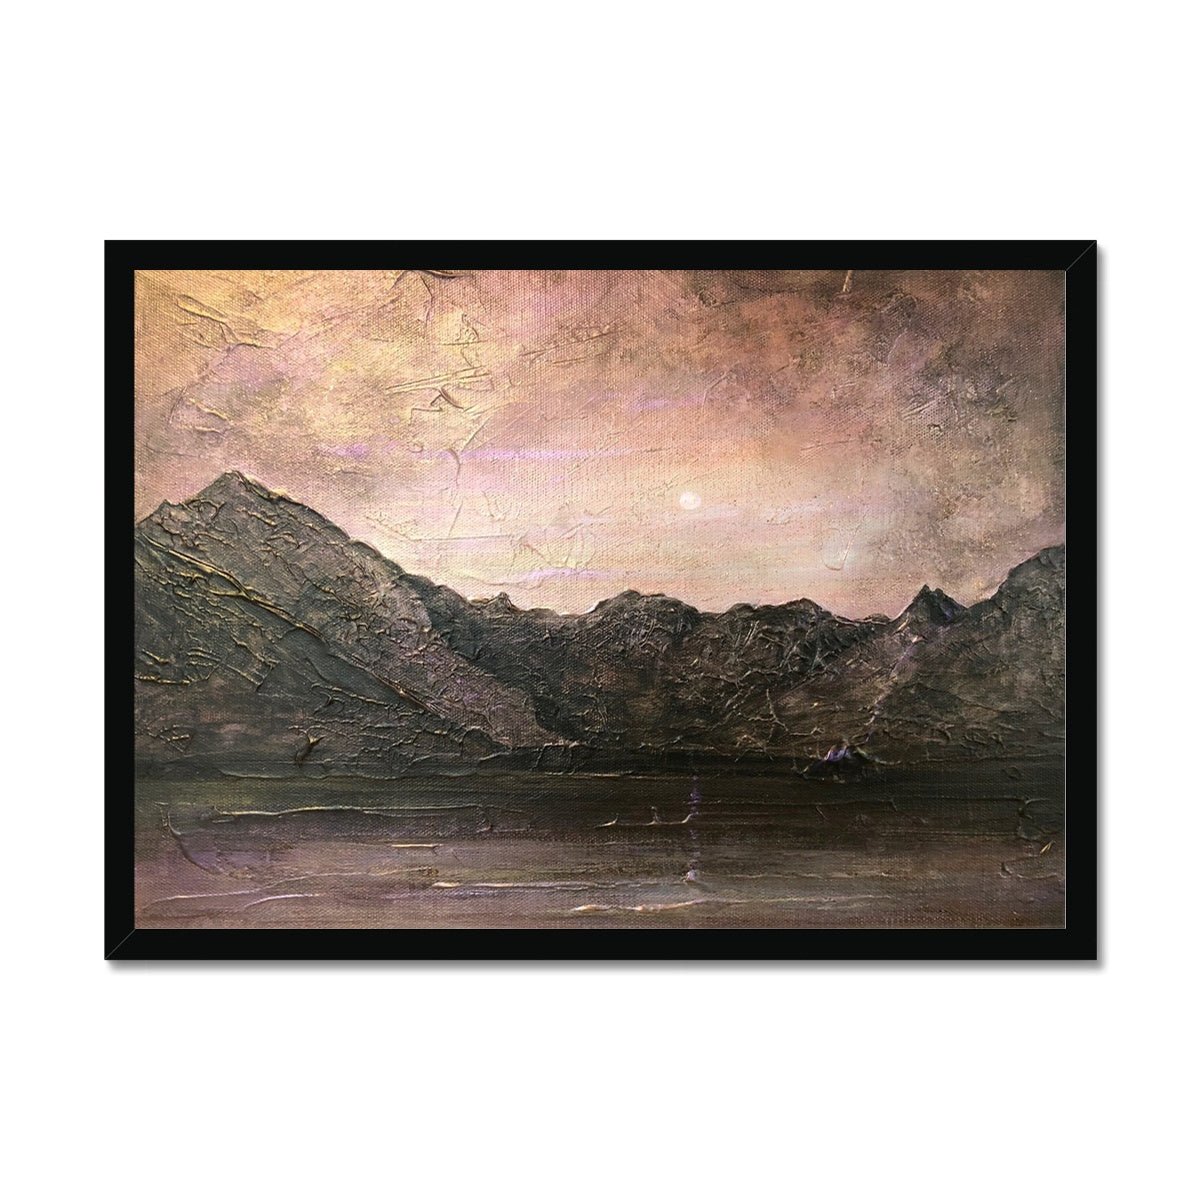 Dubh Ridge Moonlight Skye Painting | Framed Prints From Scotland-Framed Prints-Skye Art Gallery-A2 Landscape-Black Frame-Paintings, Prints, Homeware, Art Gifts From Scotland By Scottish Artist Kevin Hunter